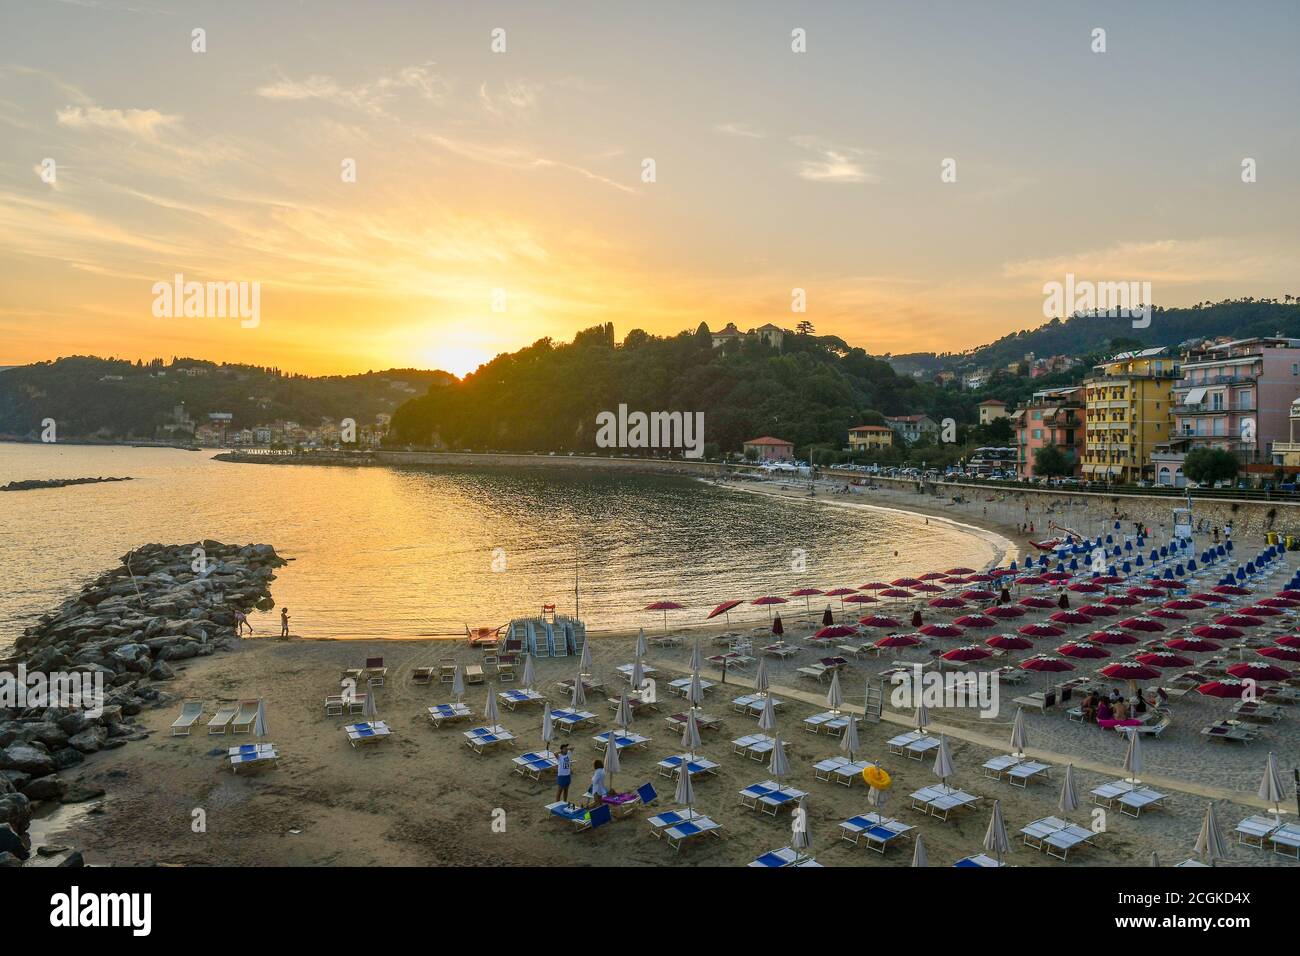 High angle view of the sandy beach of the tourist destination at sunset, San Terenzo, Lerici, La Spezia, Liguria, Italy Stock Photo